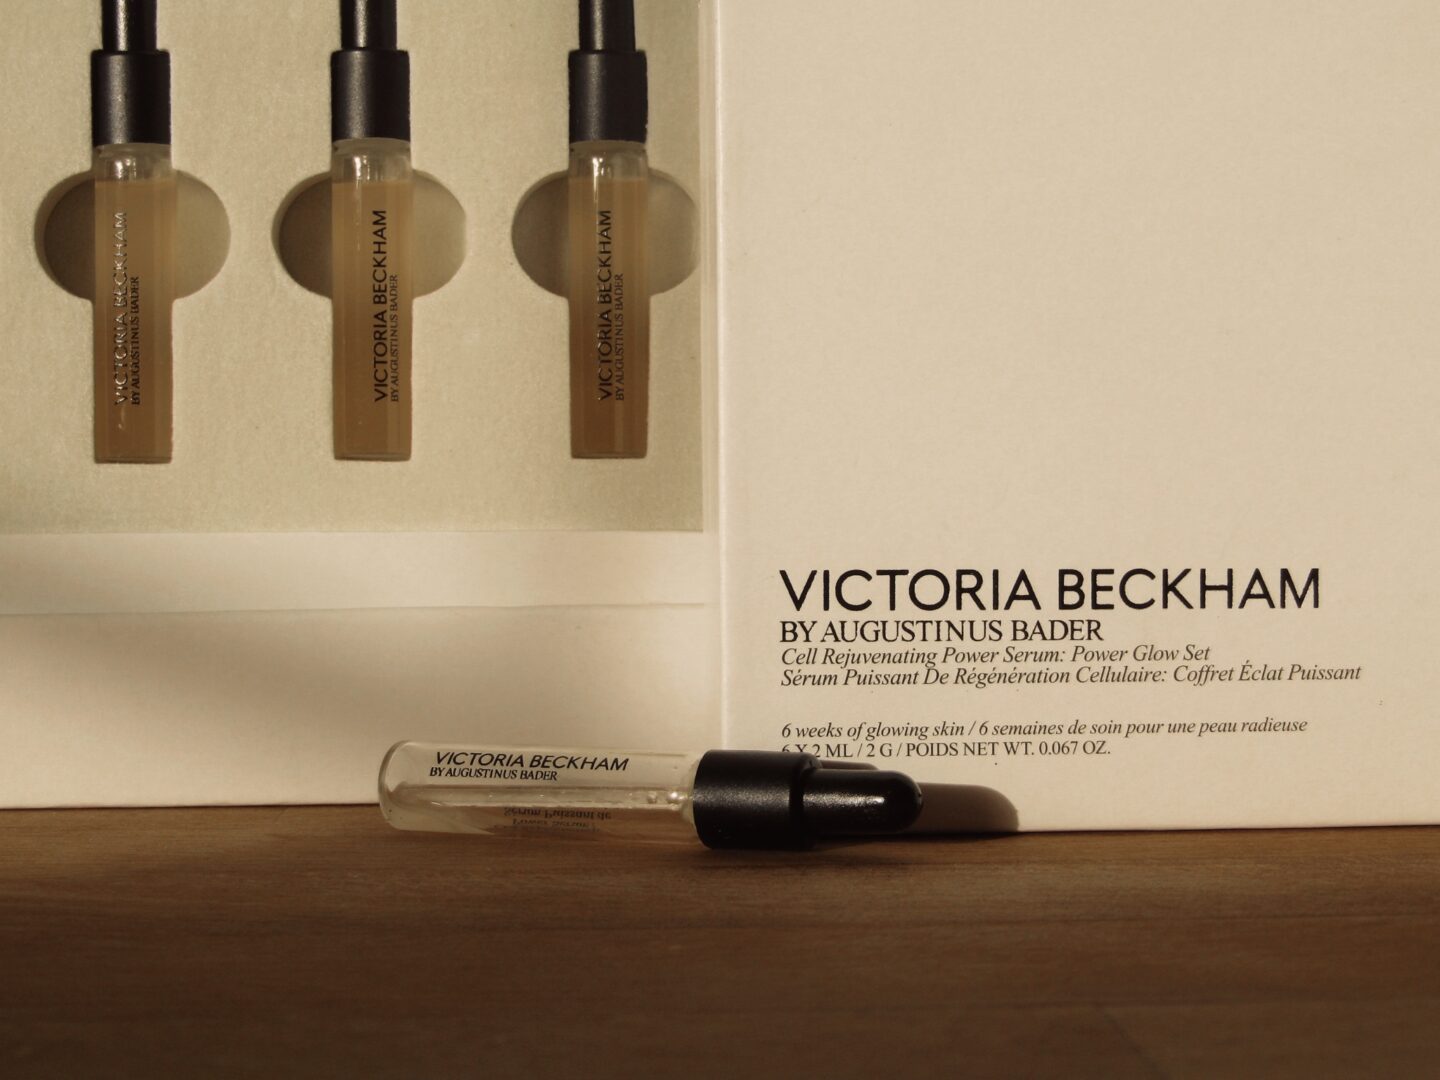 Victoria Beckham Cell Rejuvinating Power Serum Review